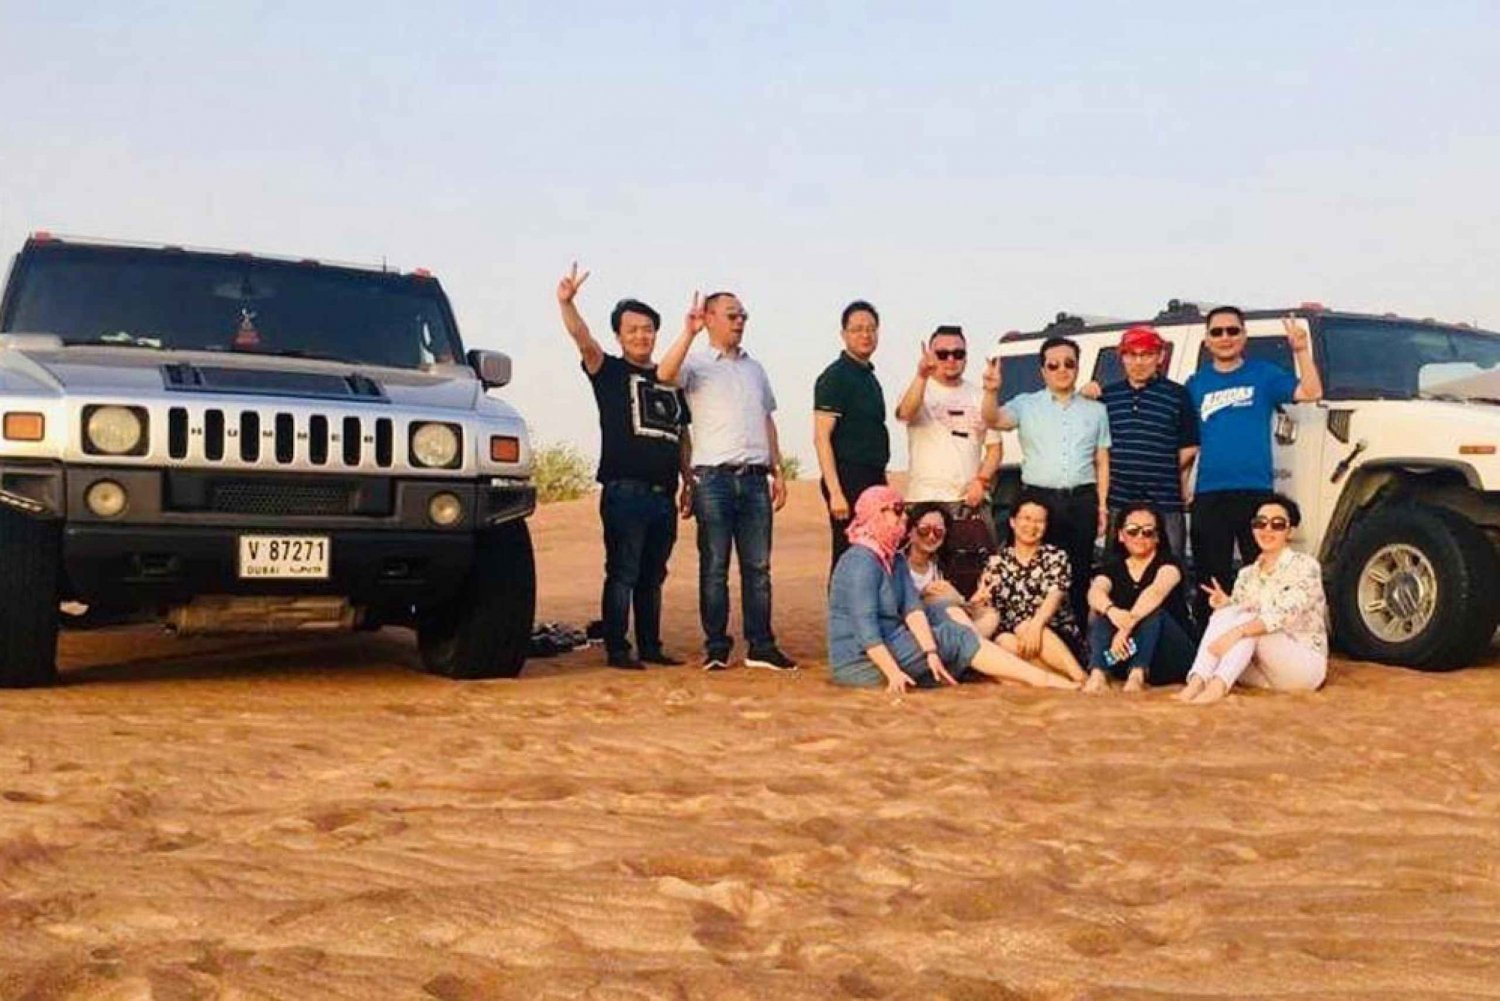 Dubai: Private Morning Hummer Desert Safari Experience